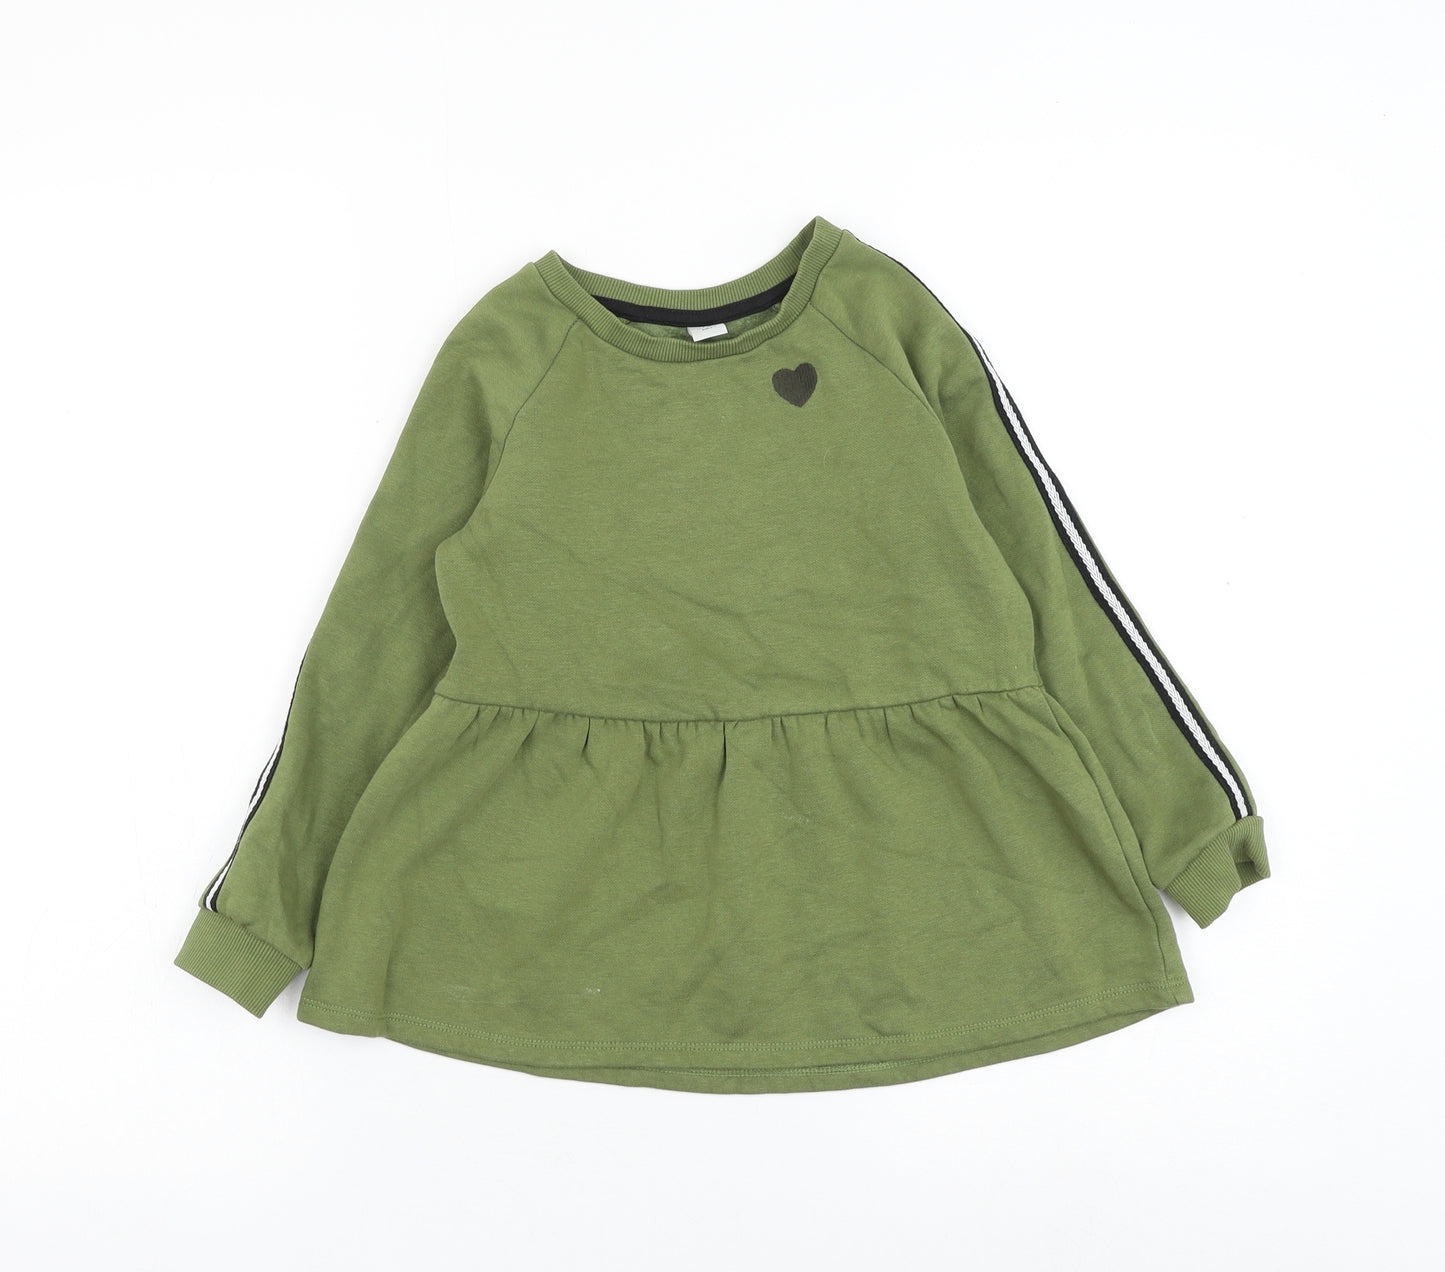 TU Girls Green Cotton Pullover Sweatshirt Size 6 Years Pullover - Heart Detail